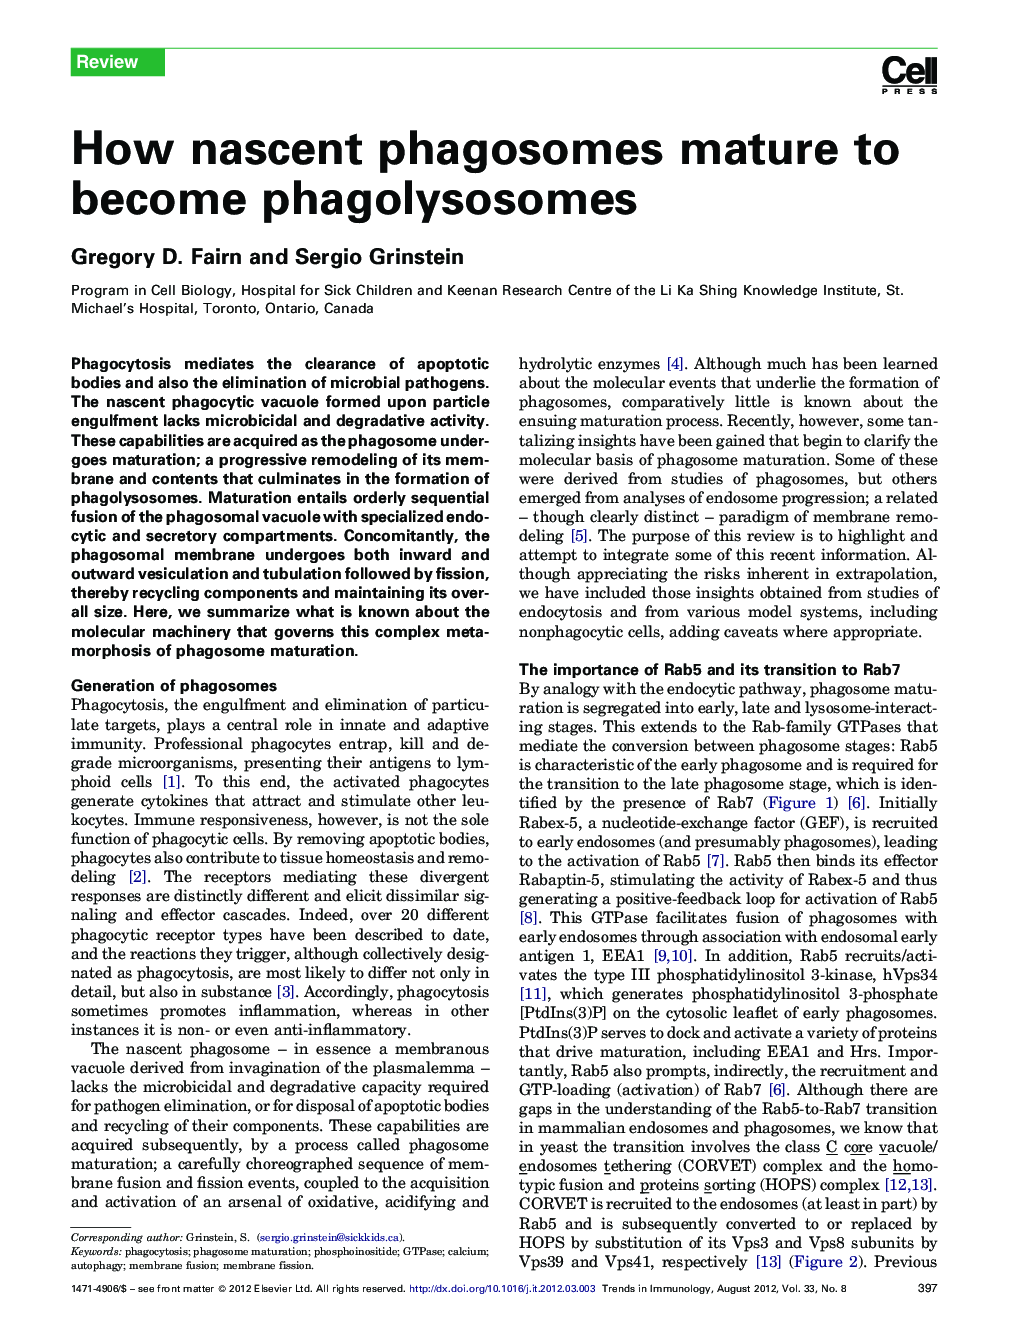 How nascent phagosomes mature to become phagolysosomes